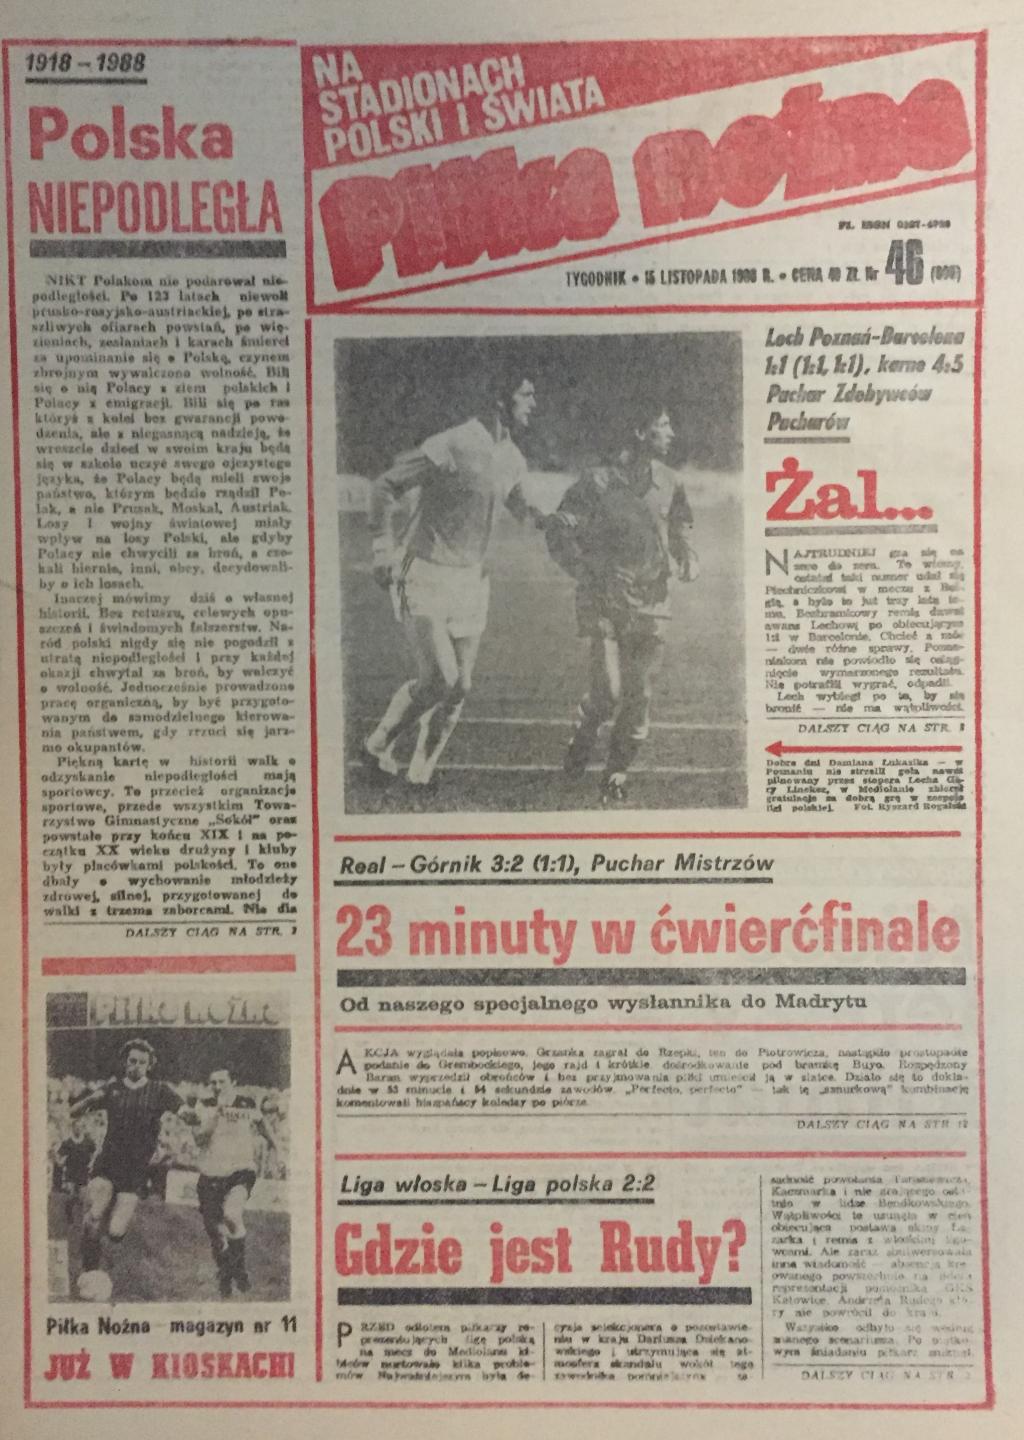 Piłka Nożna po Liga Włoska - Liga Polska 2:2 (12.11.1988) 1